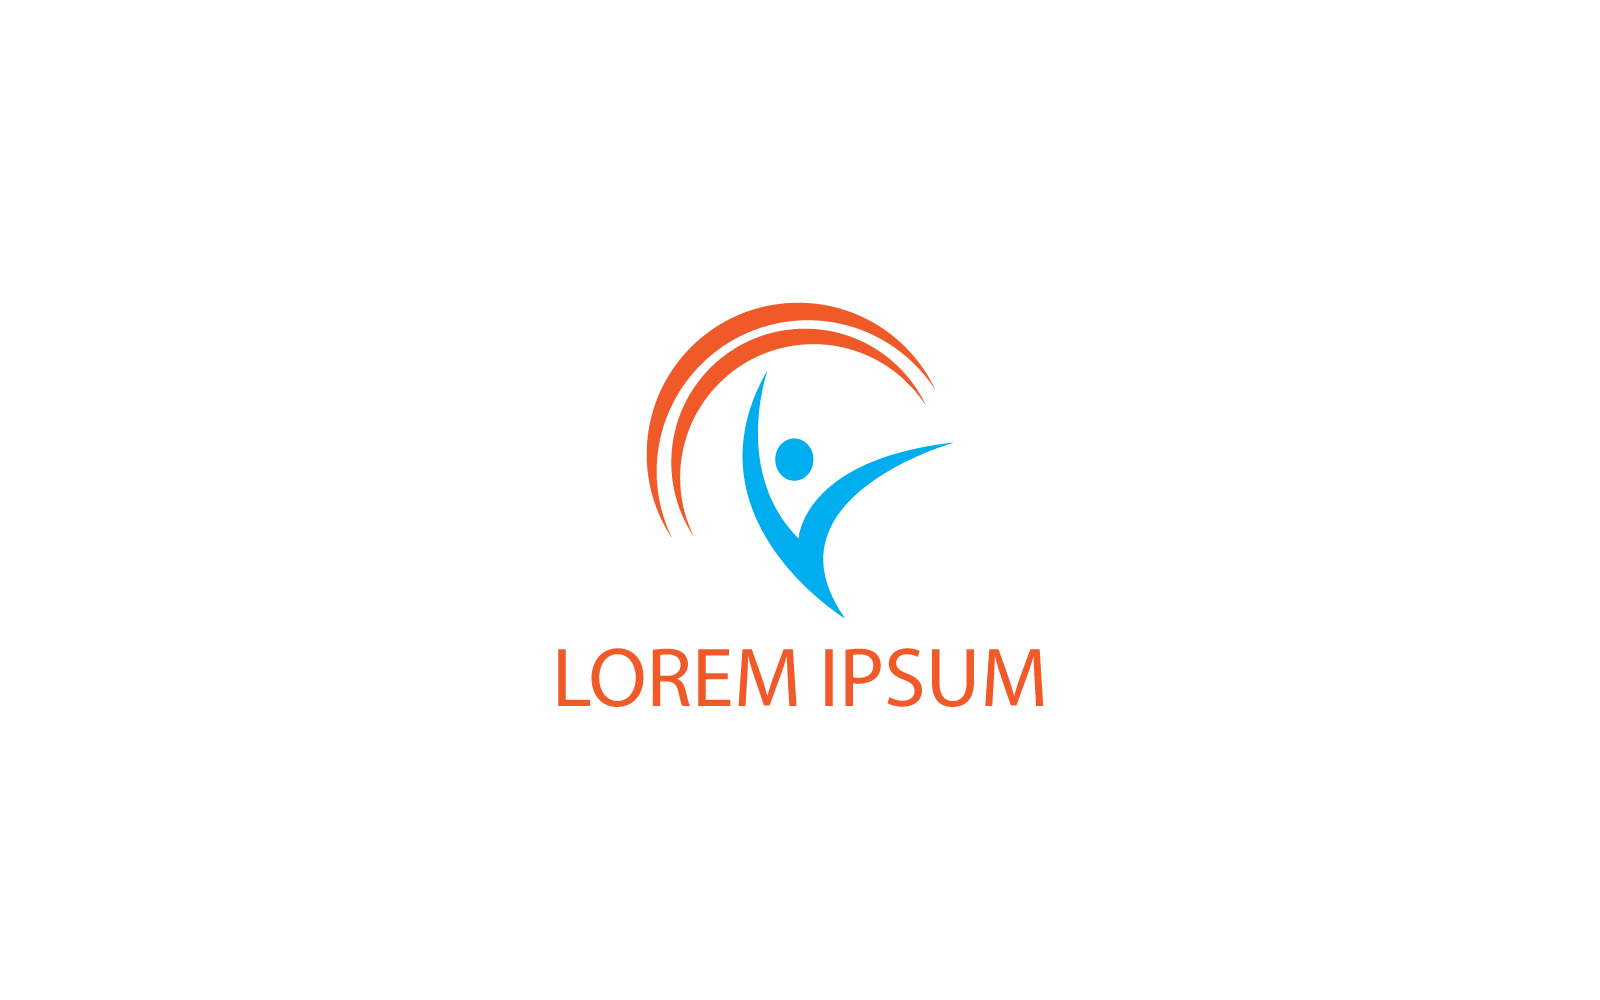 Création de logo de liberté minimaliste moderne